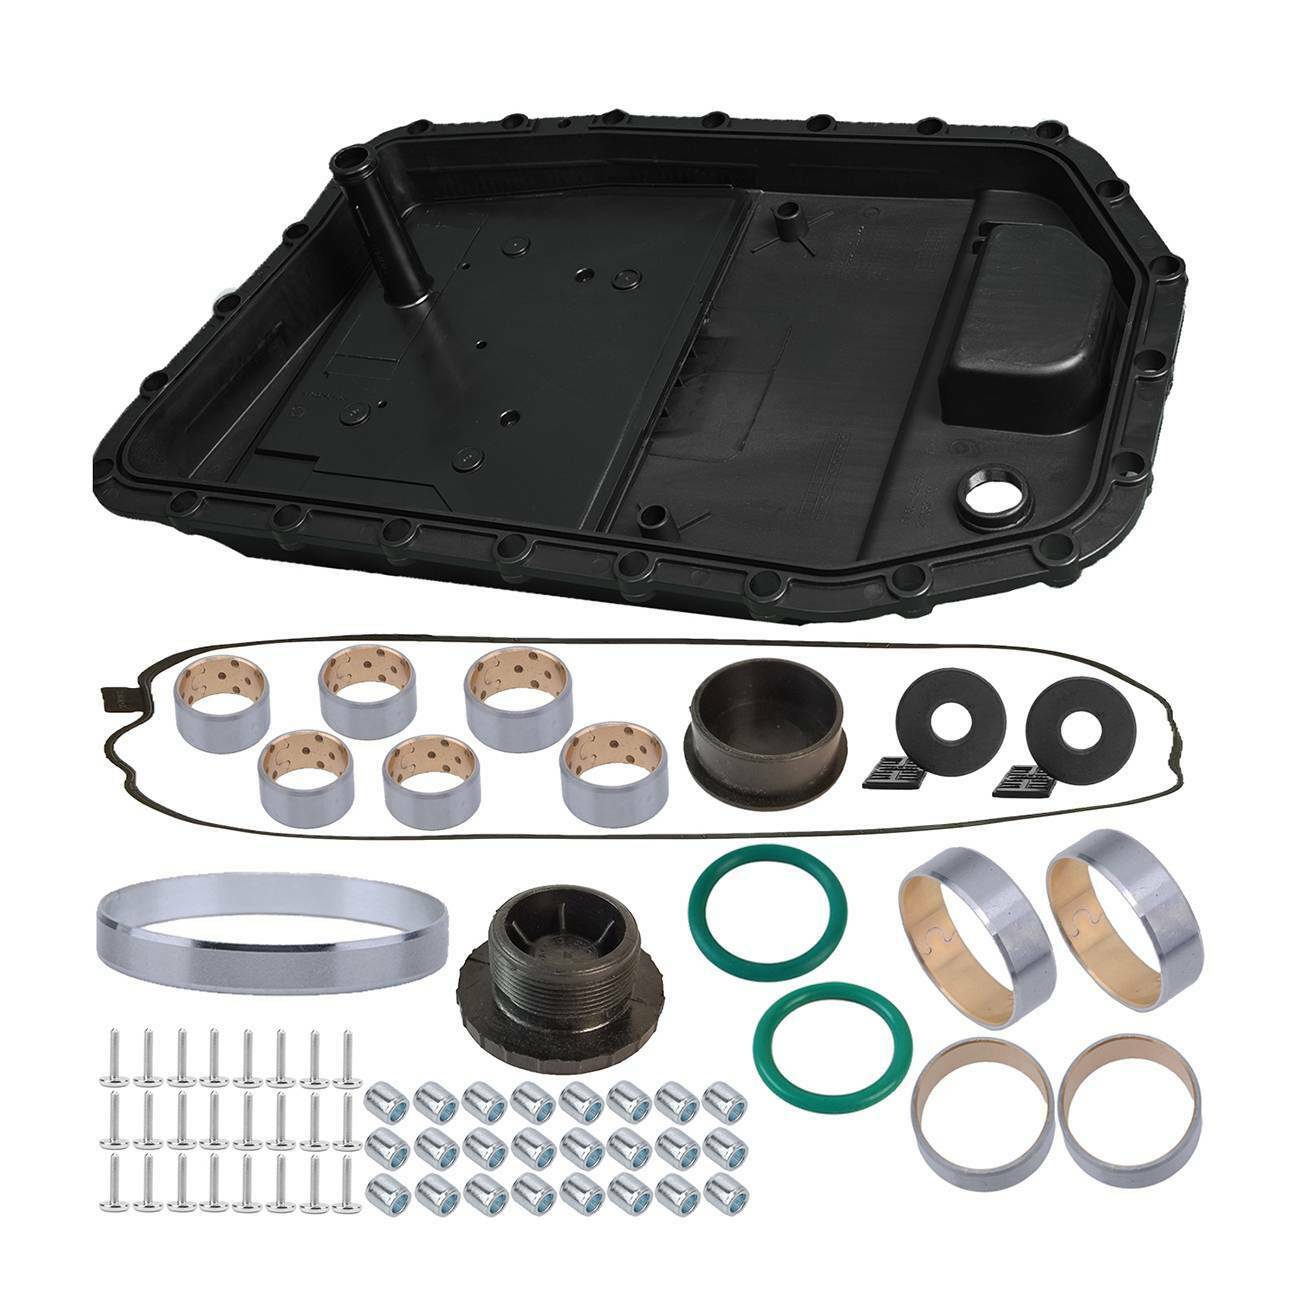 Transmission Oil Pan Filter + Repair Kit for BMW E60 E83 E89 E90 ZF6HP19 German Made